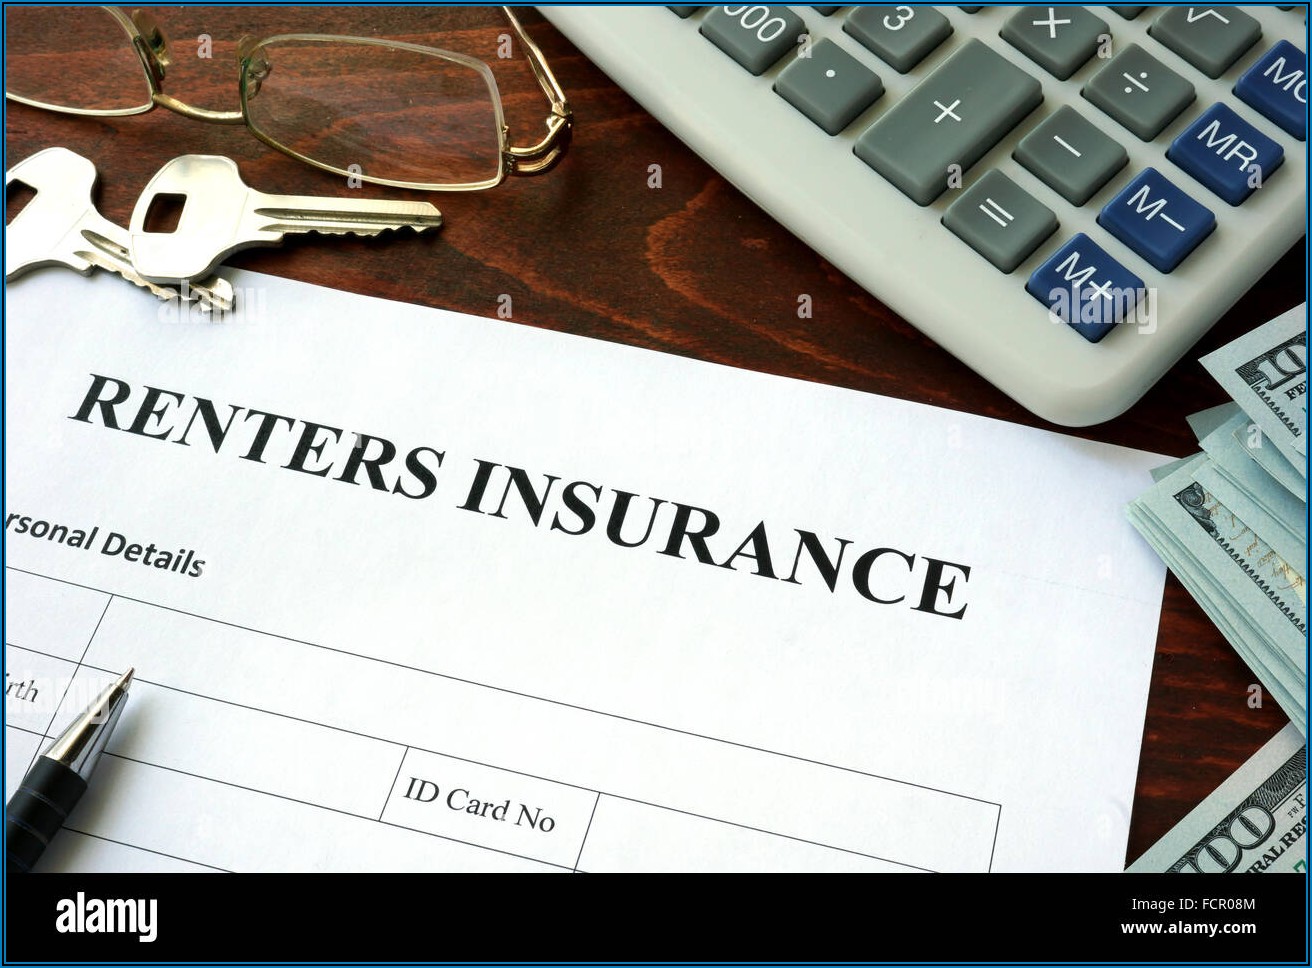 Renters Insurance Form